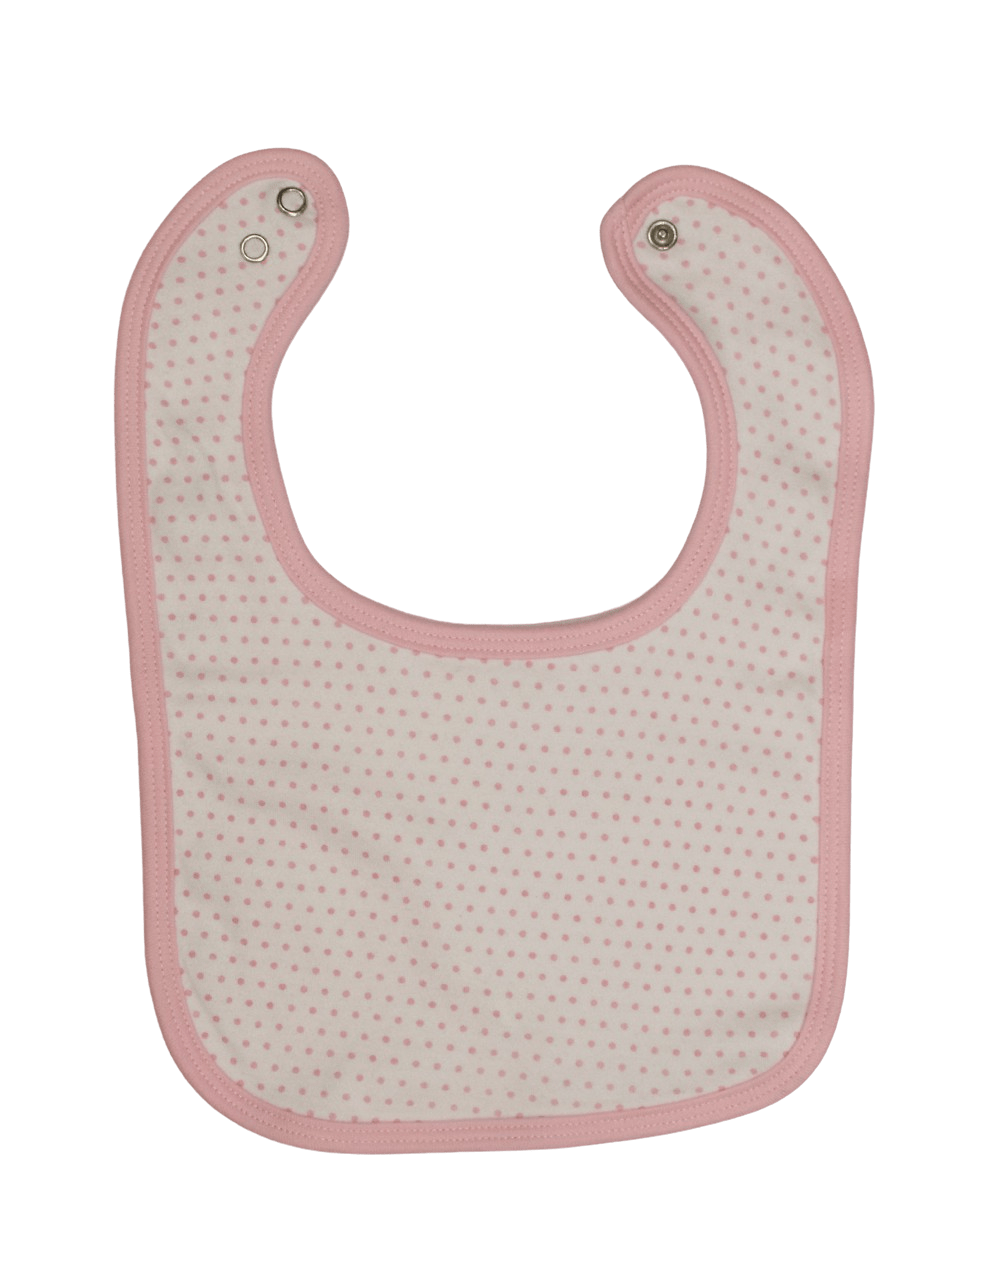 Newborn Baby Bundle: Set of 6 Items Passion Lilie - Free